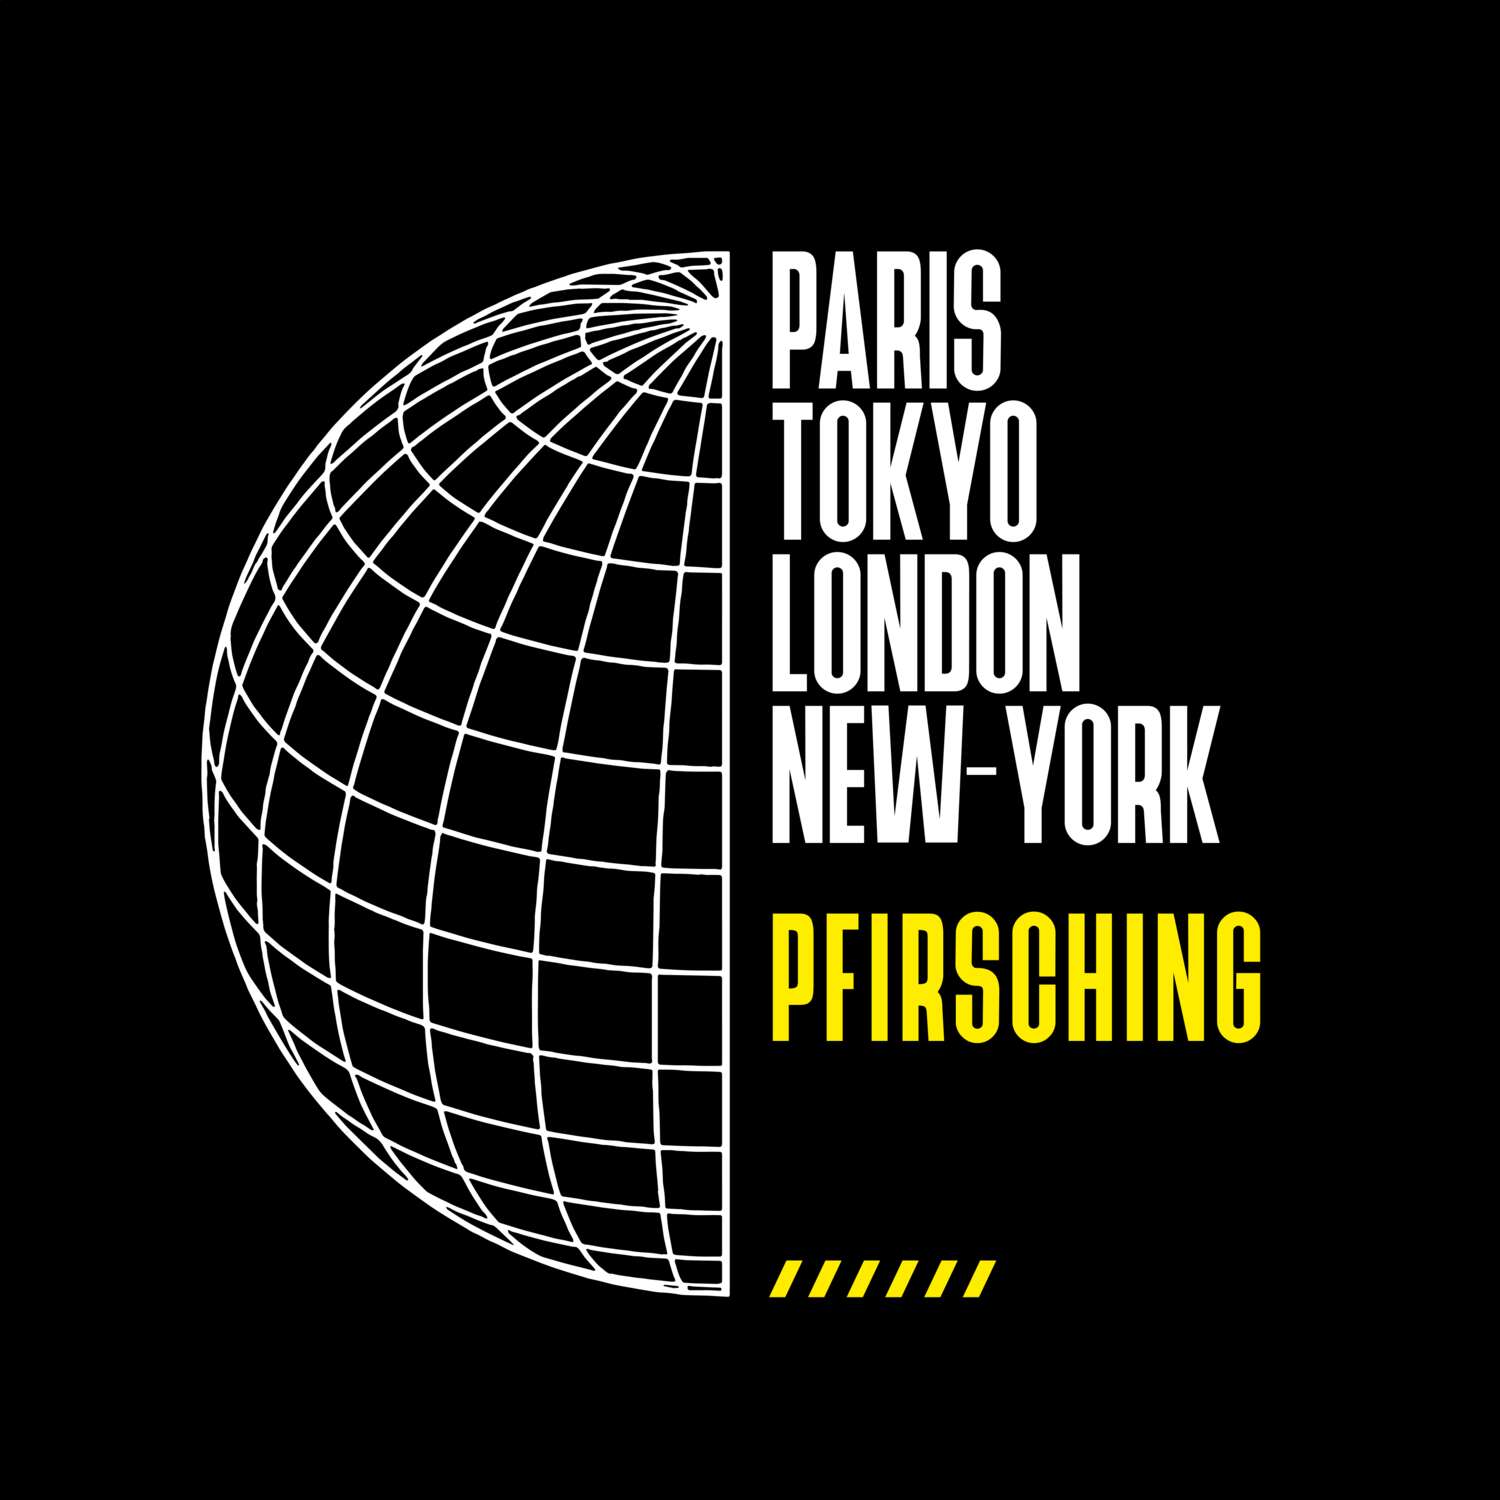 Pfirsching T-Shirt »Paris Tokyo London«